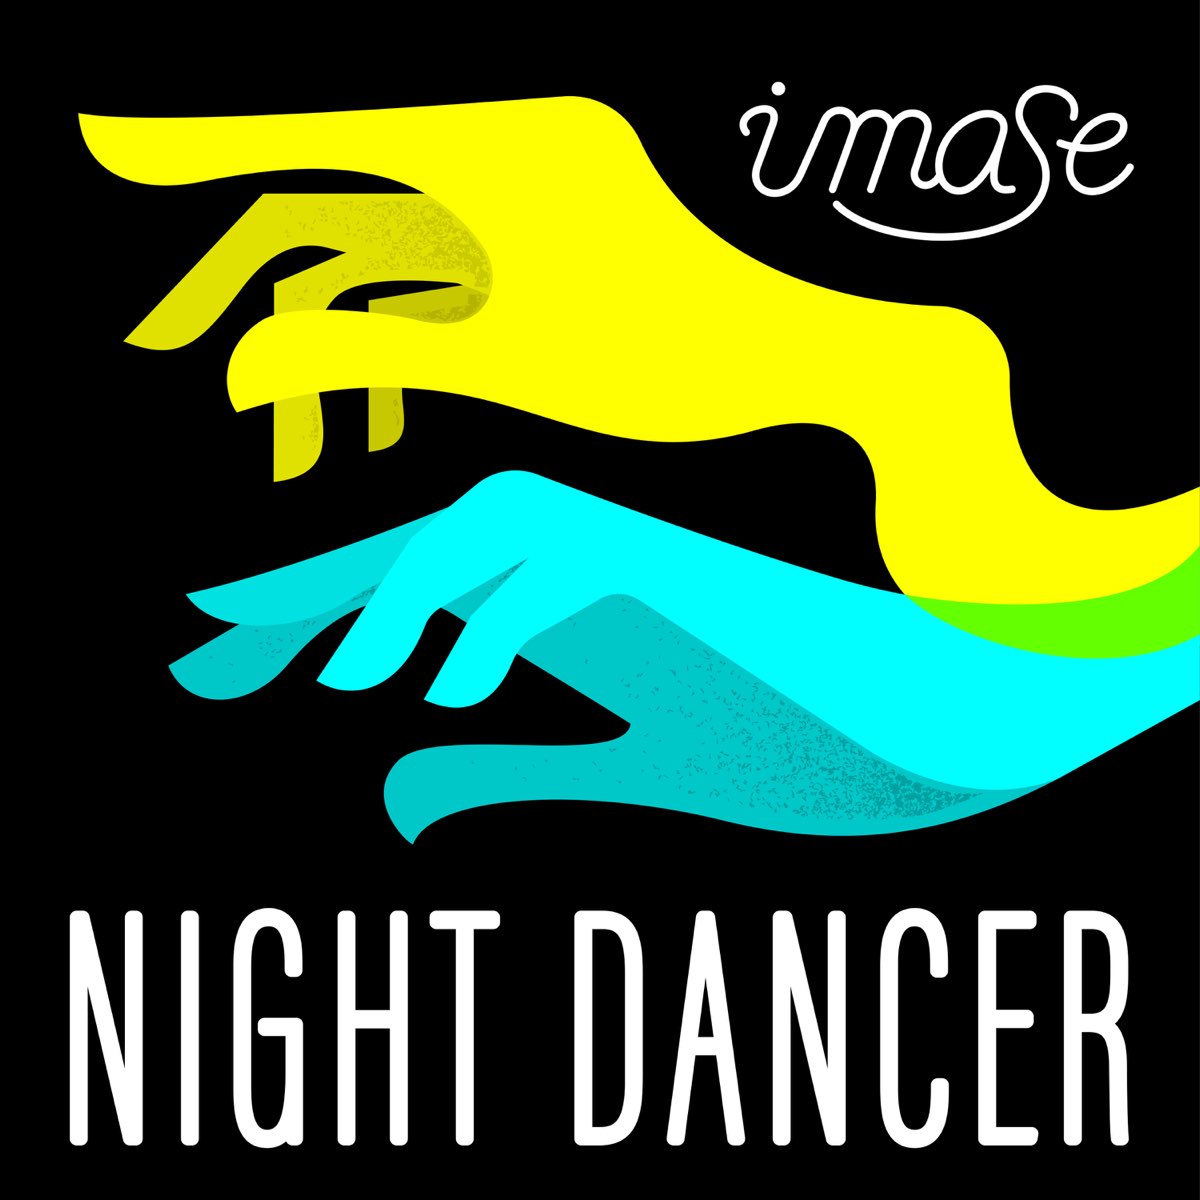 ‎NIGHT DANCER - EP - Album by imase - Apple Music